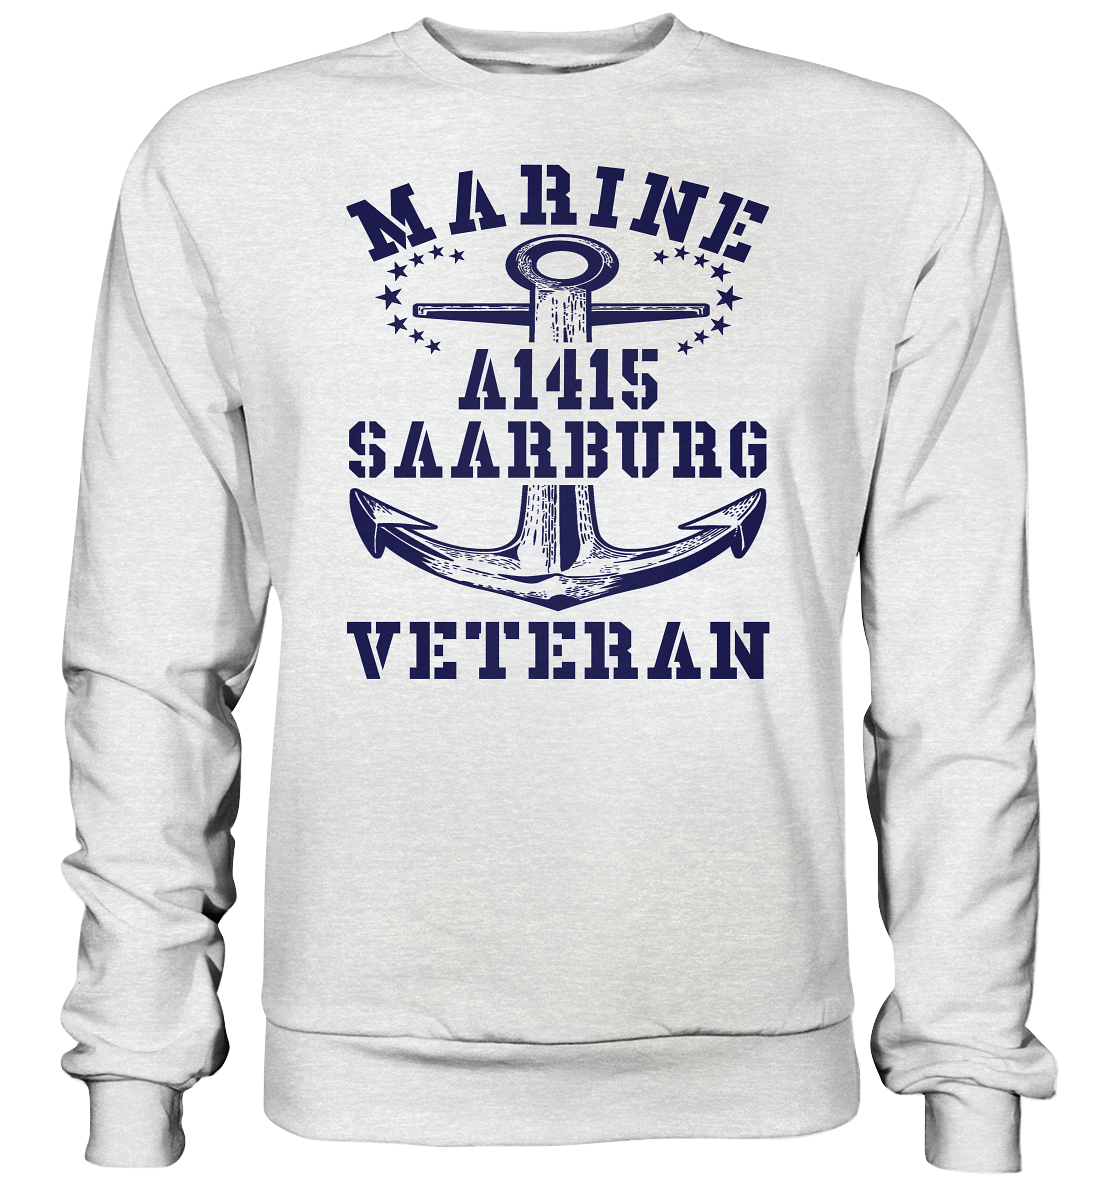 Troßschiff A1415 SAARBURG Marine Veteran - Premium Sweatshirt